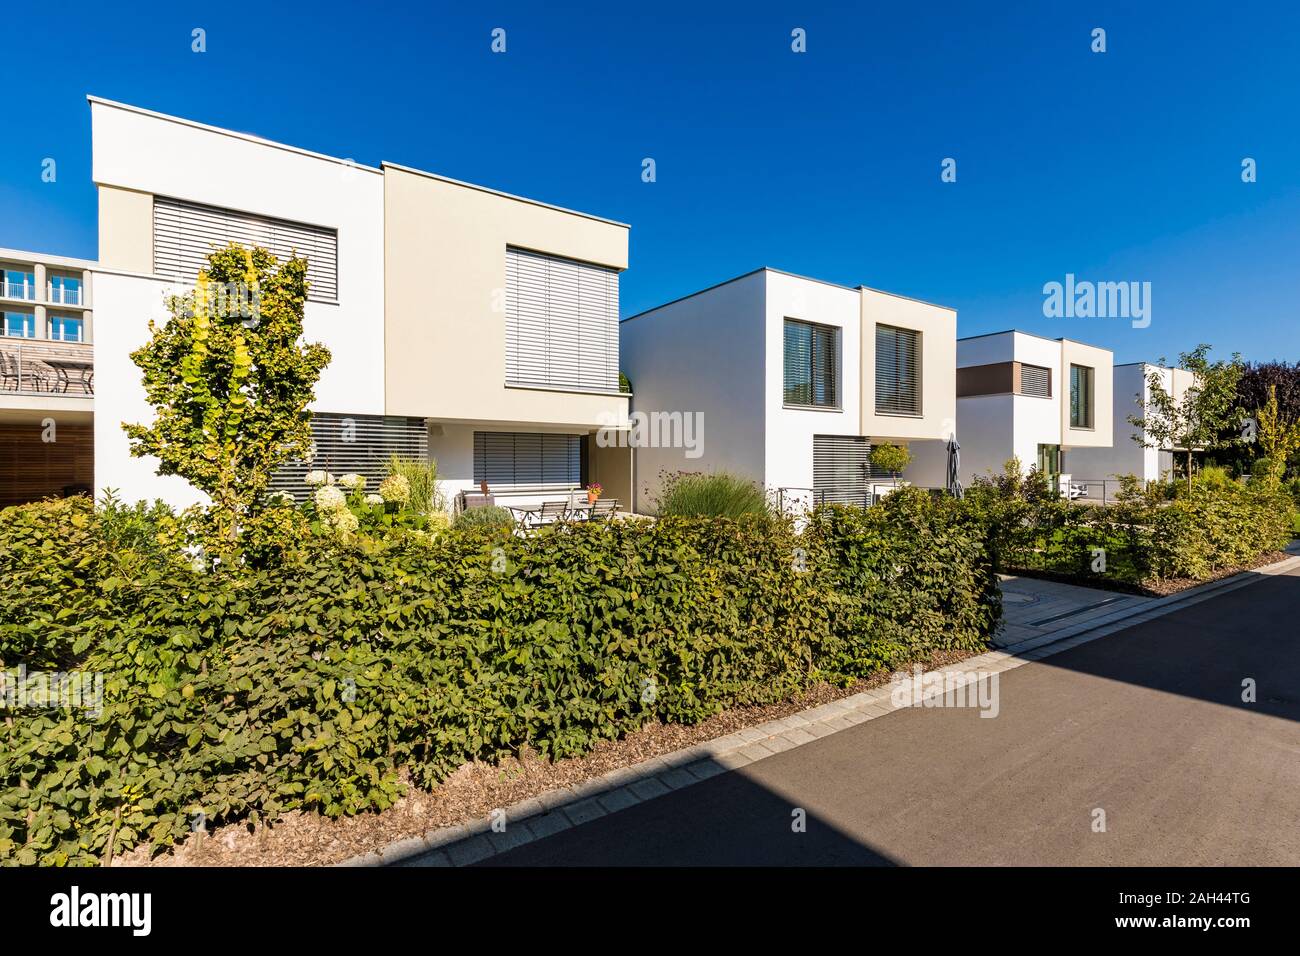 Alemania, Baviera, Neu-Ulm, patio delantero setos de suburbio casas Foto de stock